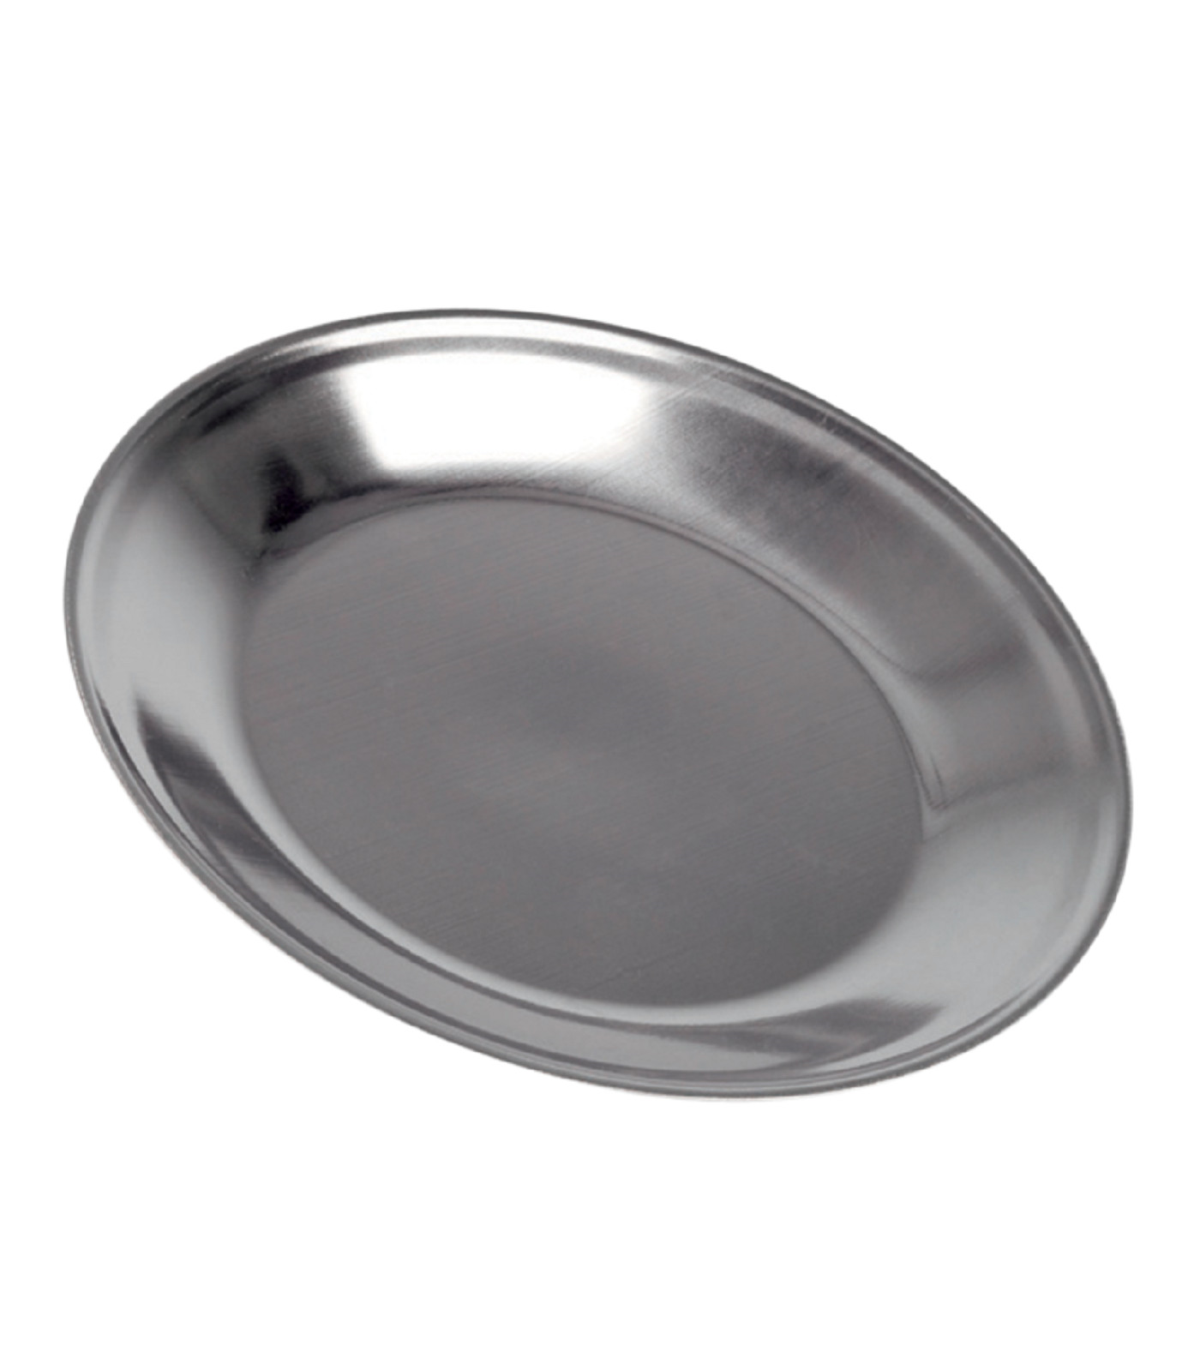 Tradineur - Tapa giratortillas de acero inoxidable, diámetro 28 cm, plato  volteatortillas para sartén para dar la vuelta fácilme